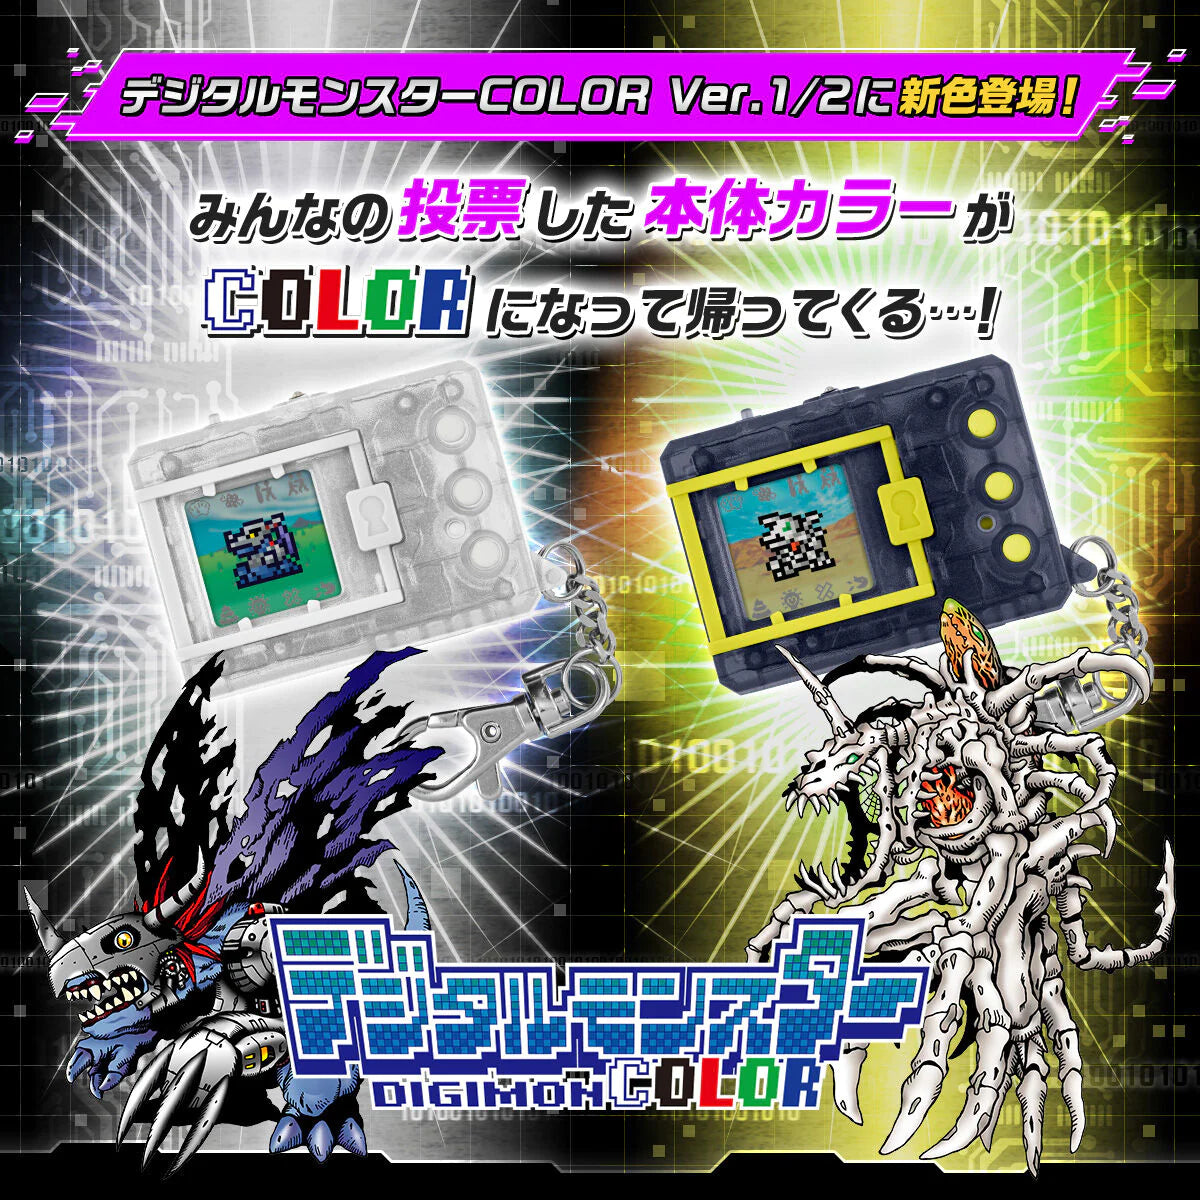 [IN STOCK in HK] Digimon COLOUR Original Clear